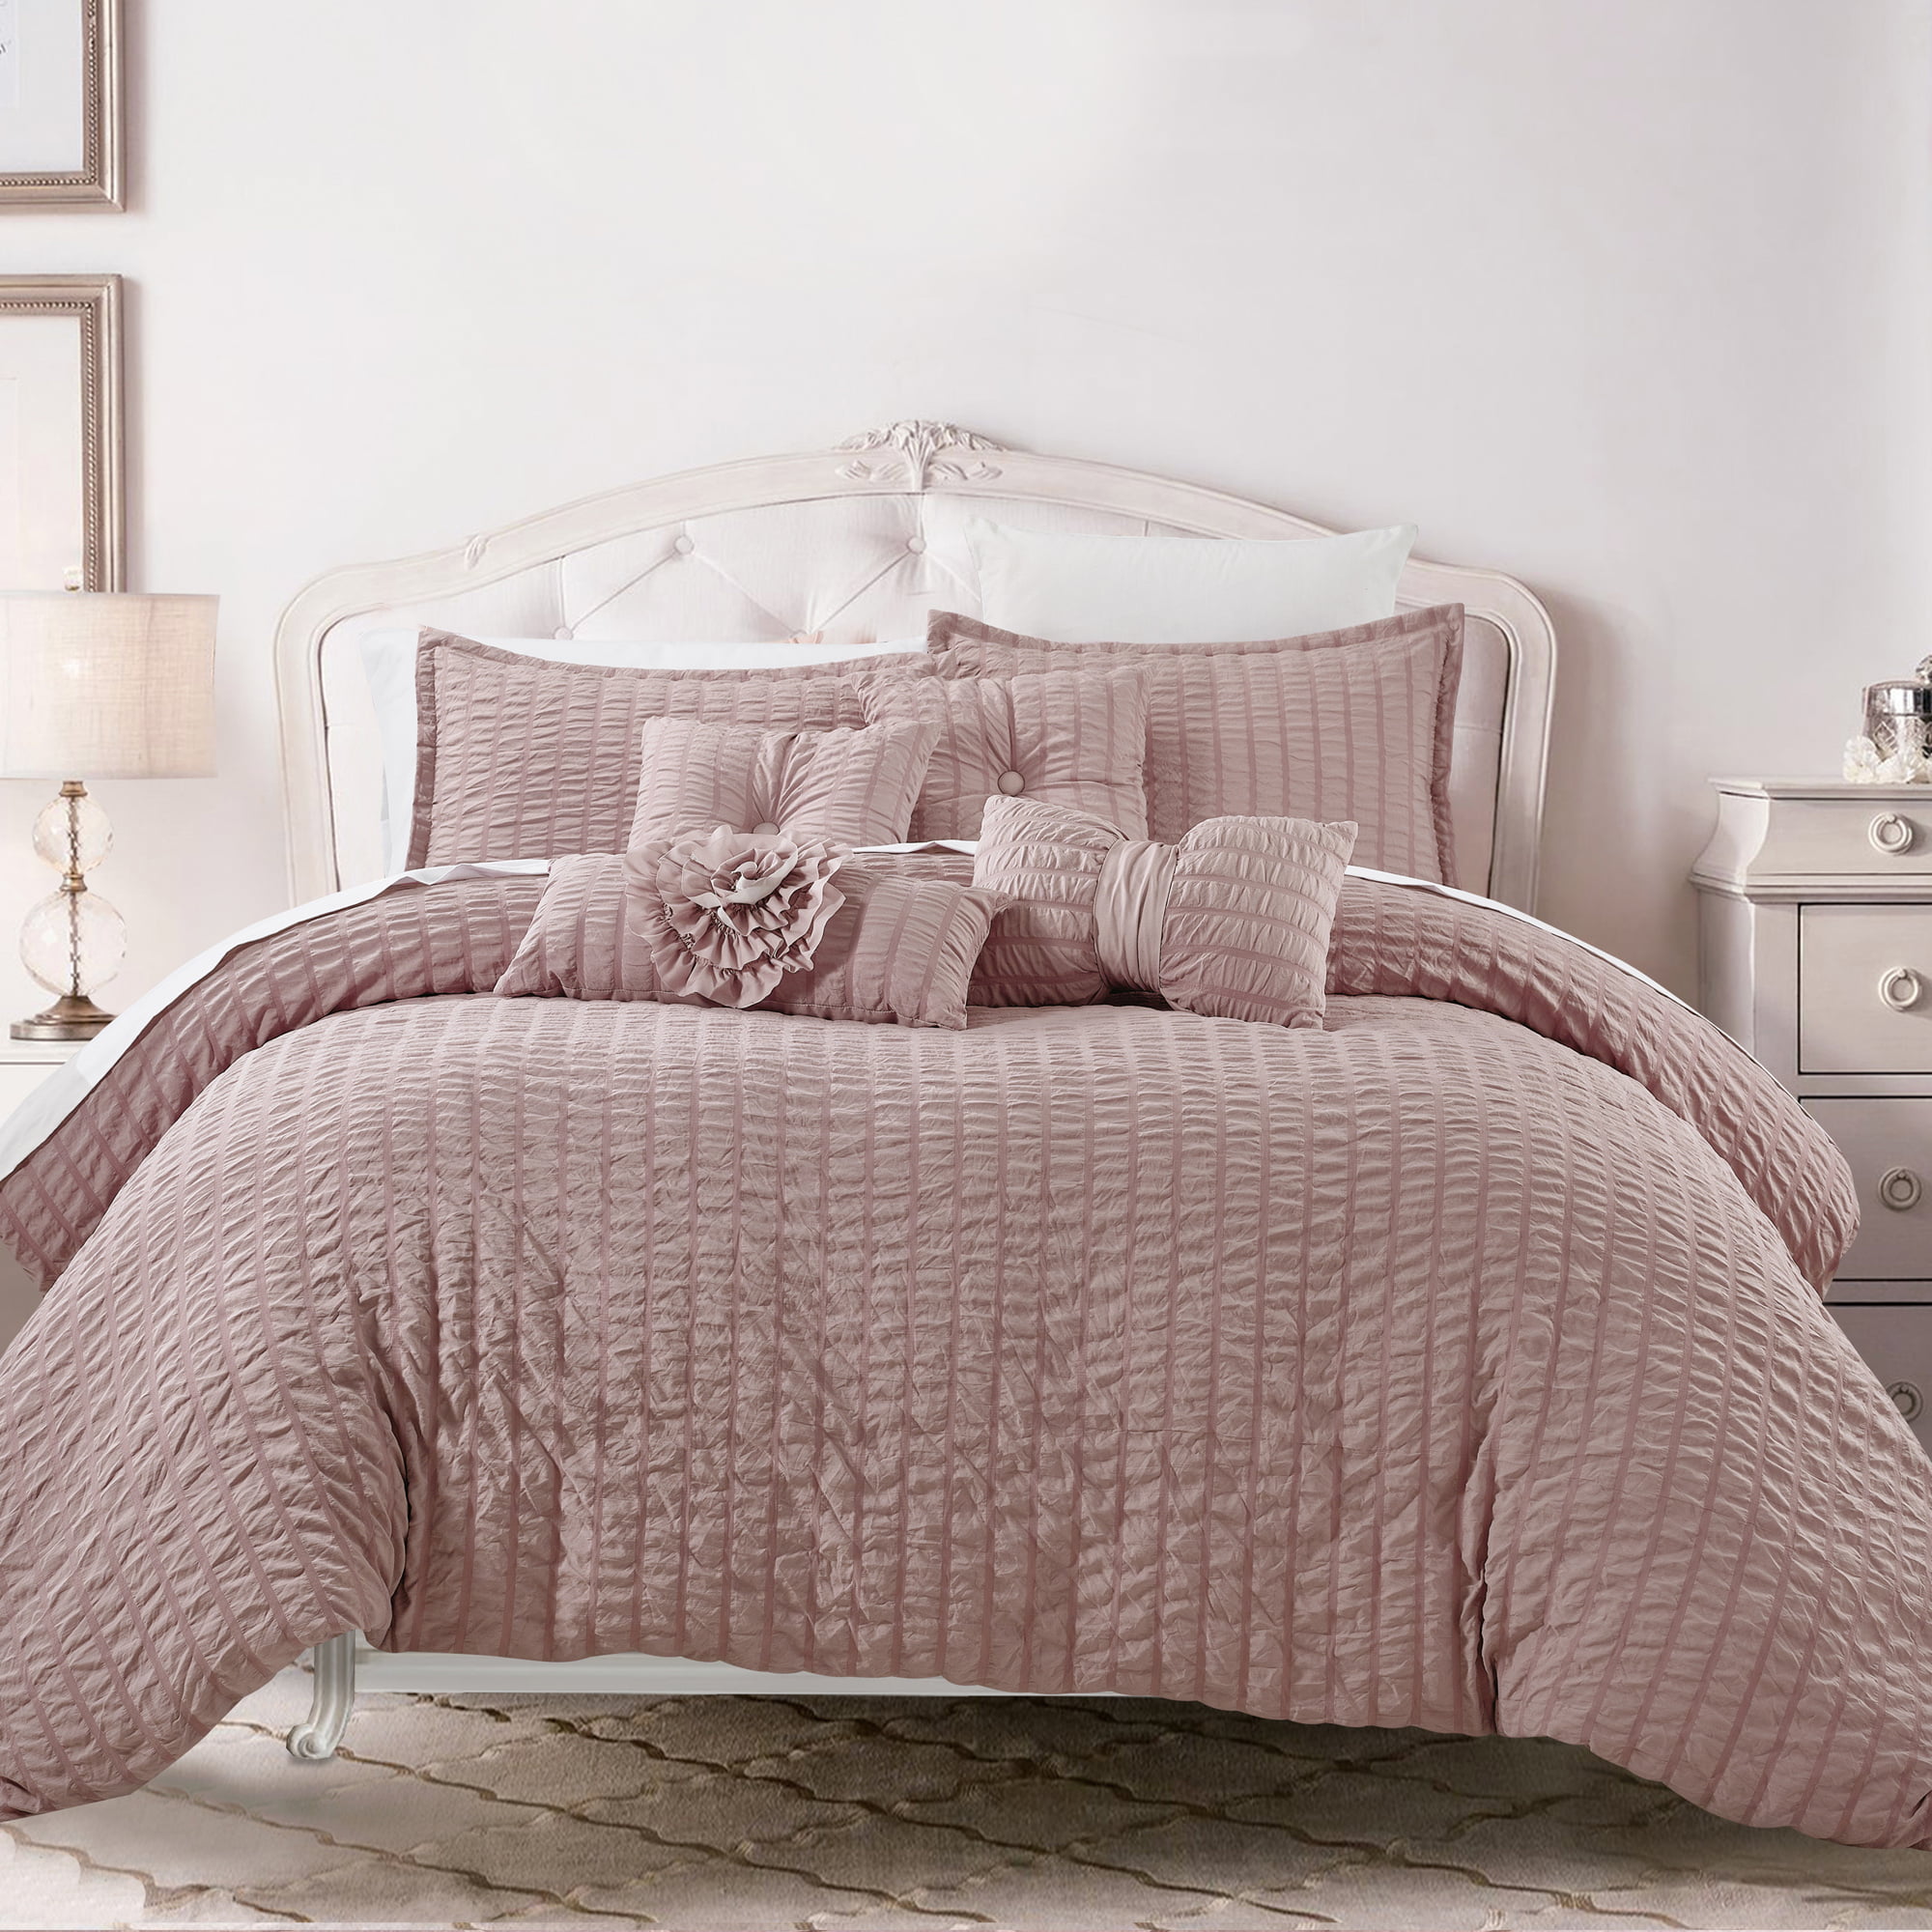 Hgmart Bedding Comforter Set Bed In A, What Size Comforter For King Bed